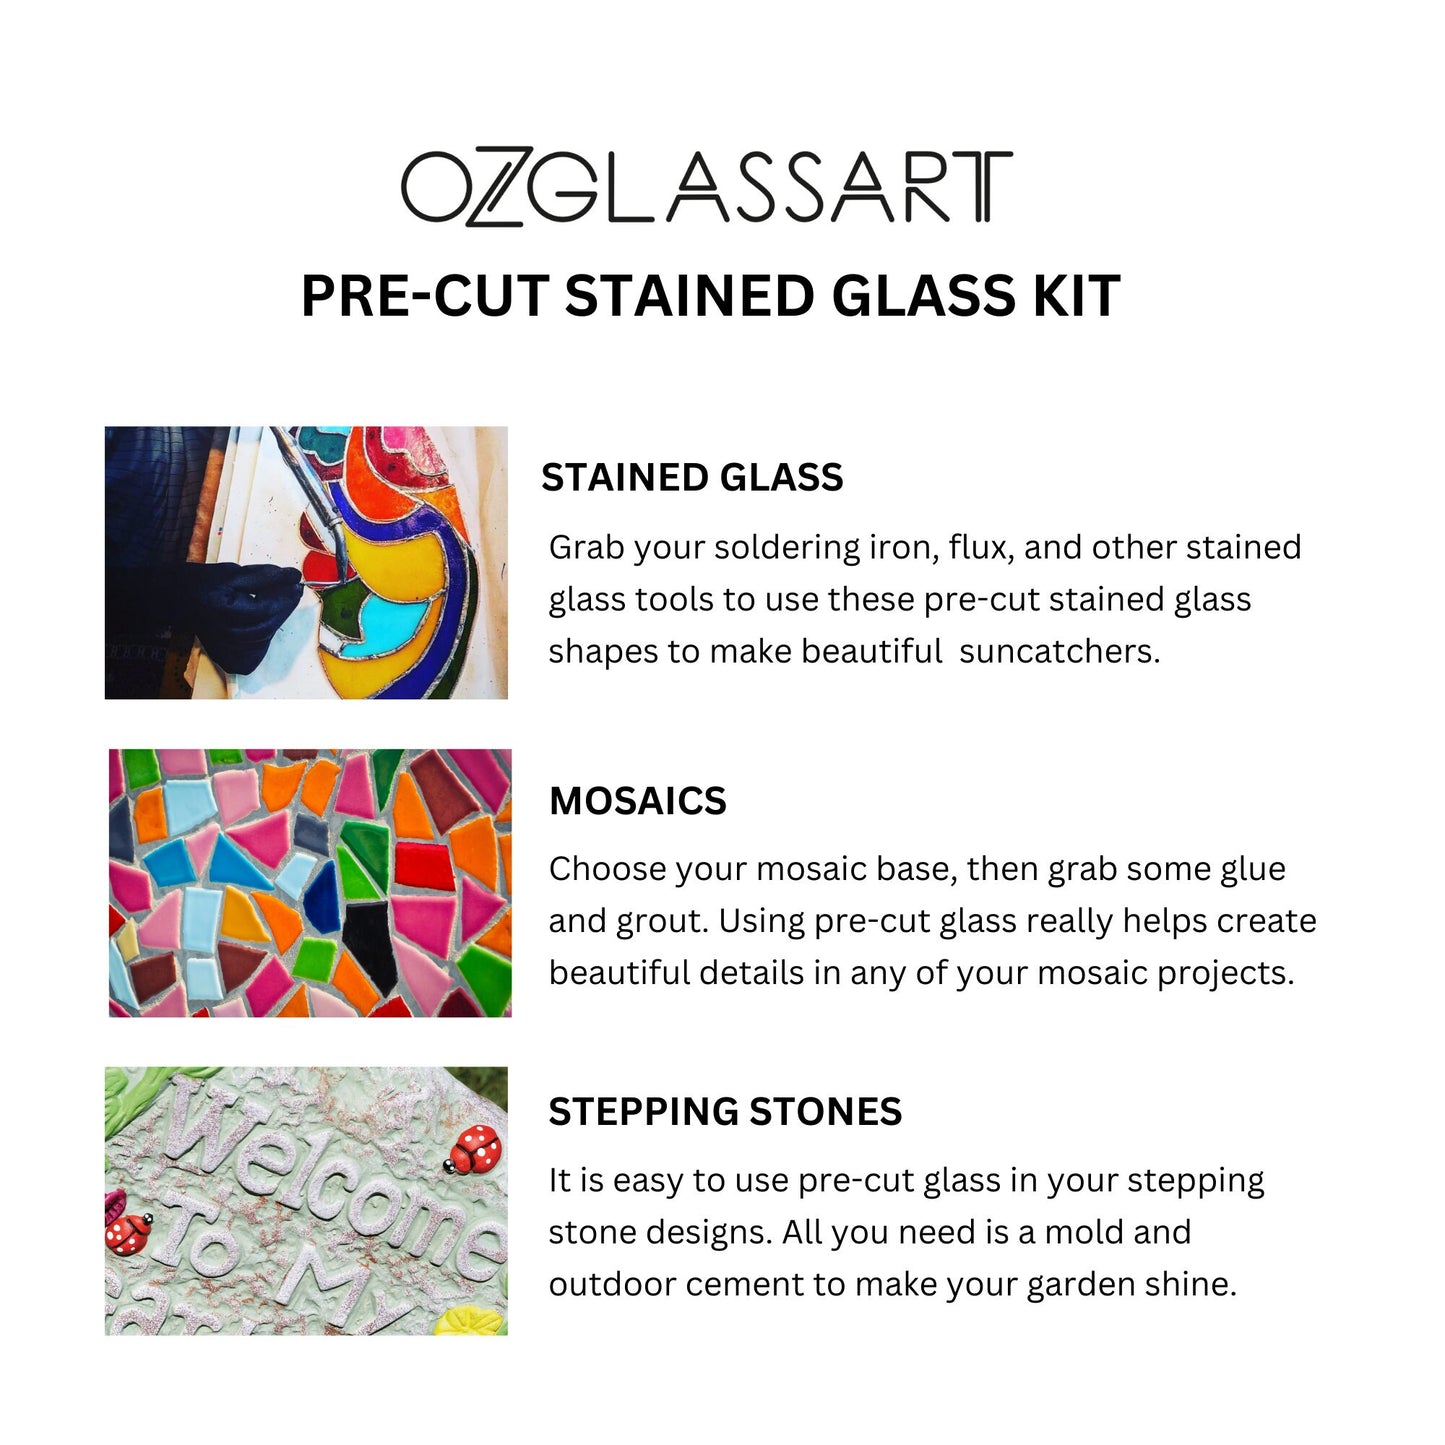 Hamsa Hand Precut Stained Glass Kit - Stained Glass Hamsa Hand Pre-Cut Kit DIY